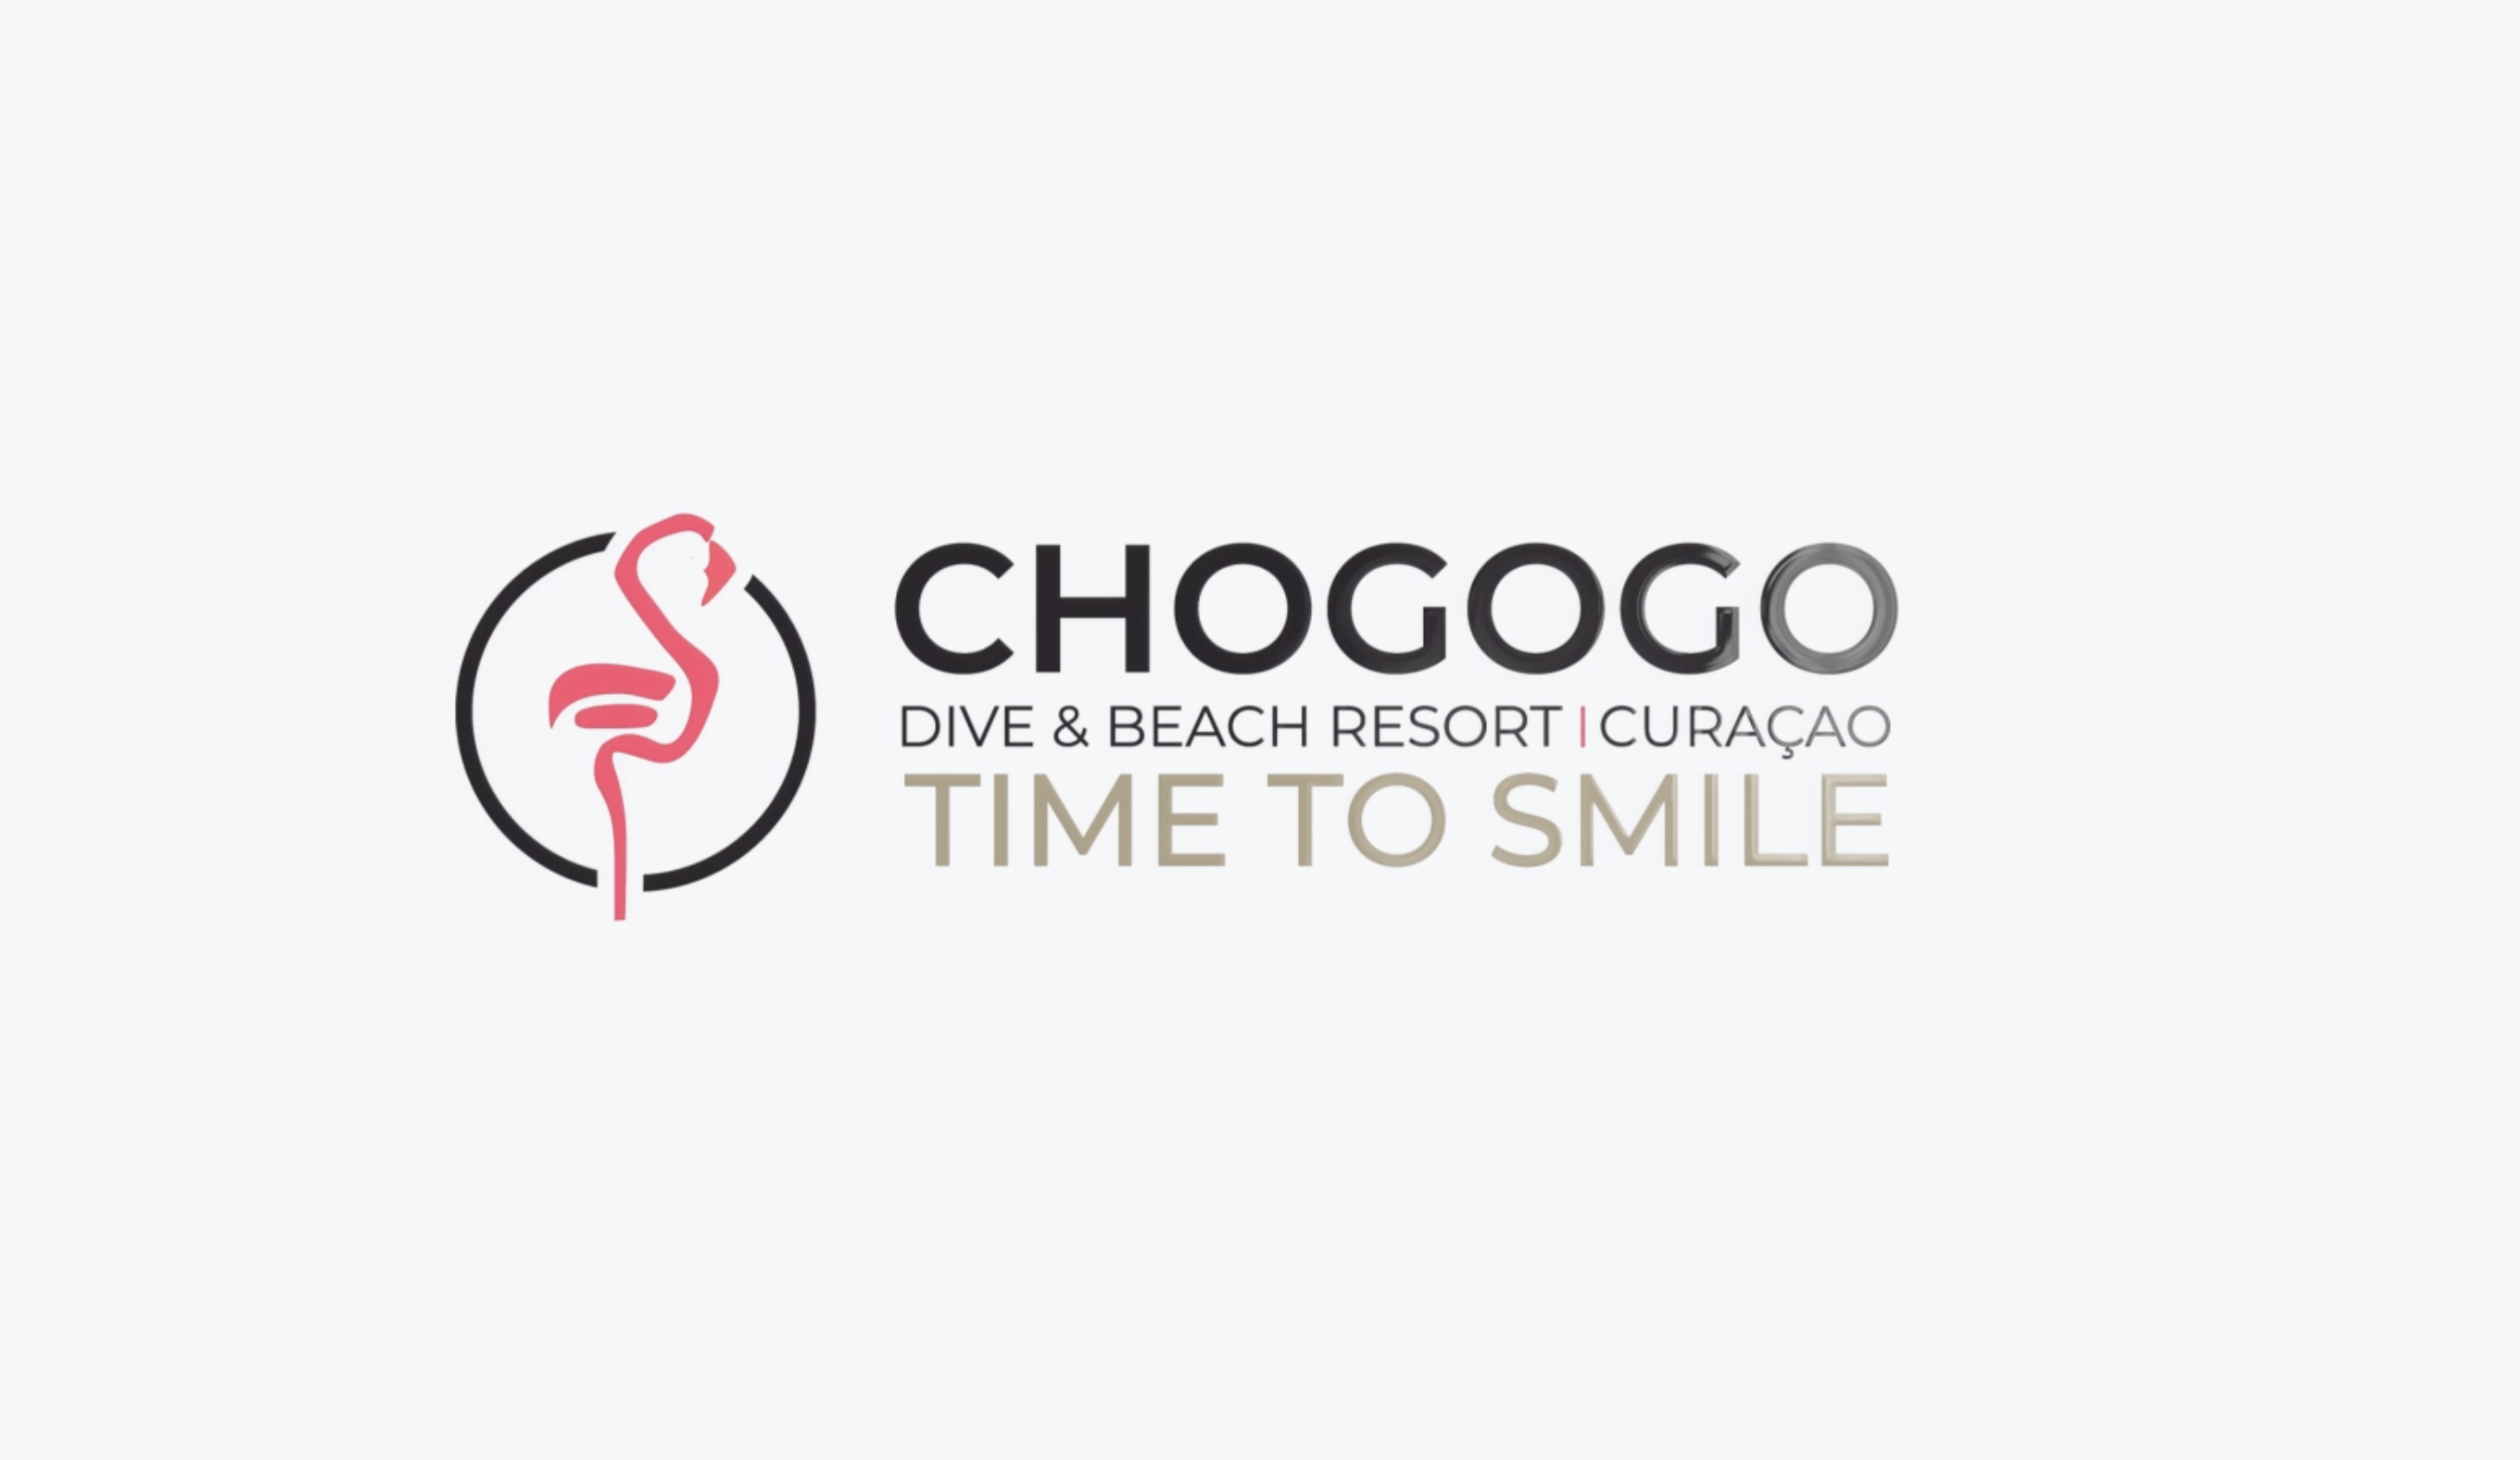 Chogogo Dive & Beach resort